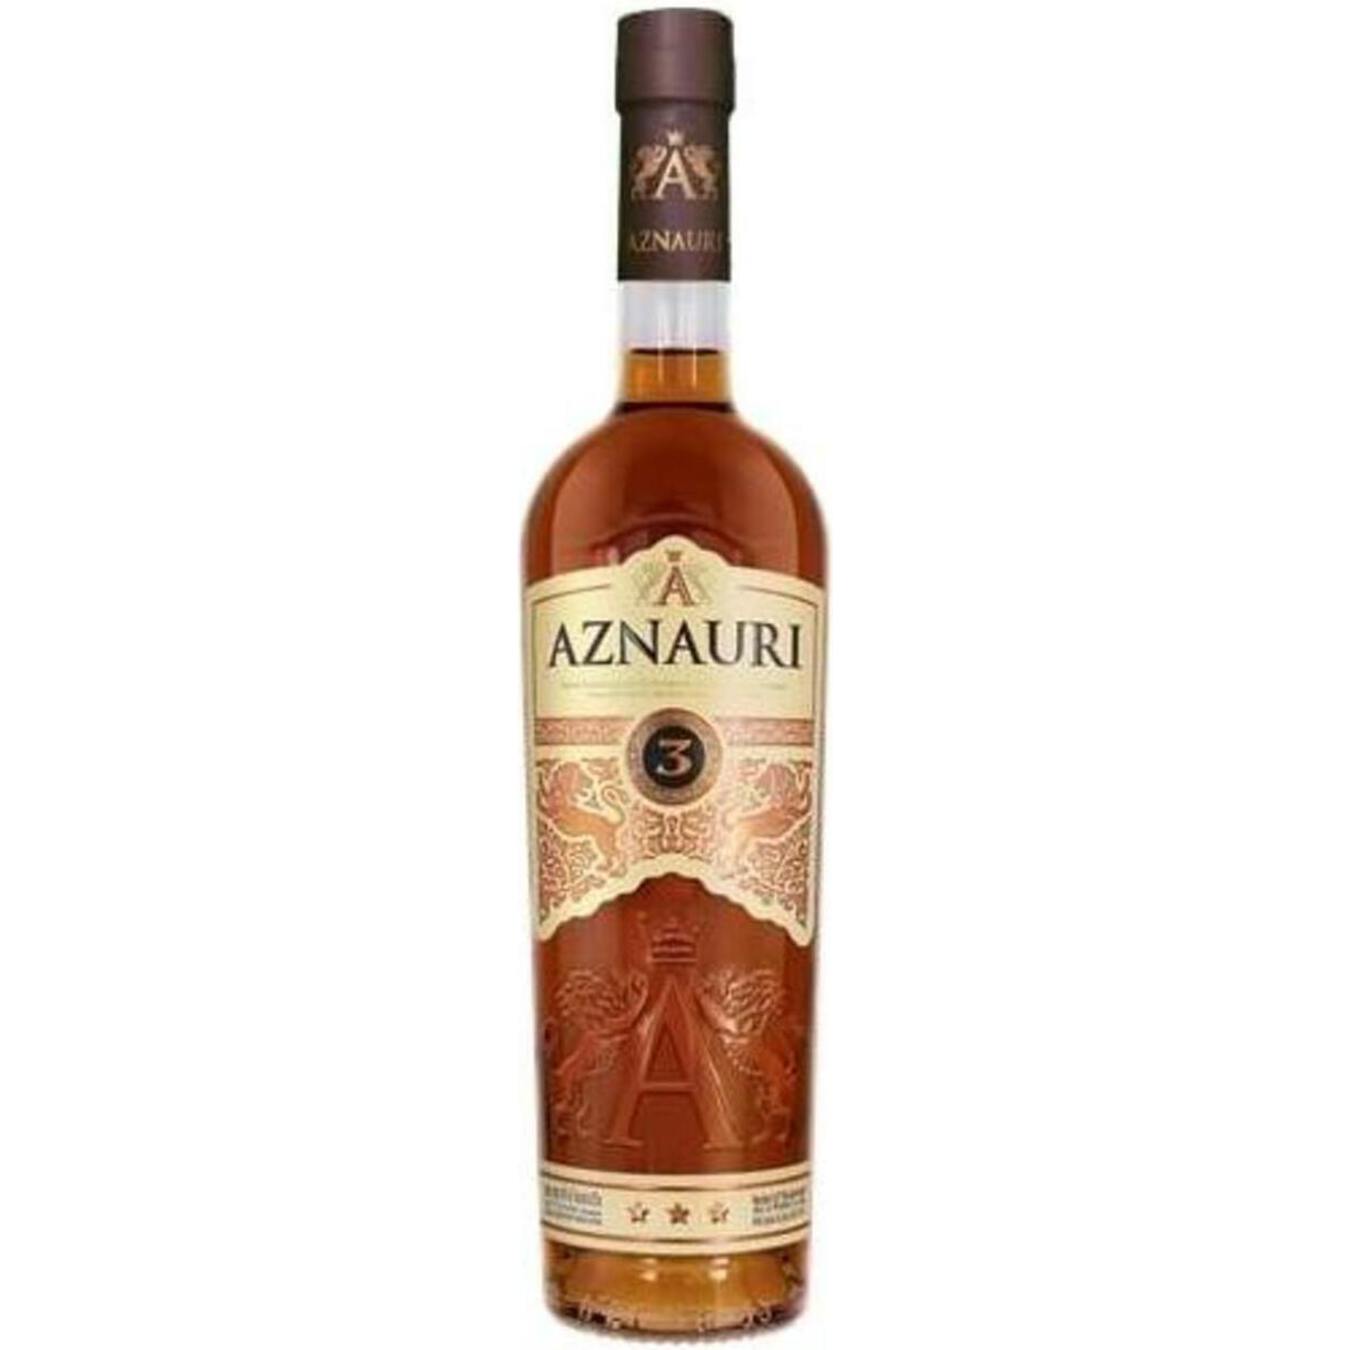 Aznauri 3* Cognac 40% 0,5l